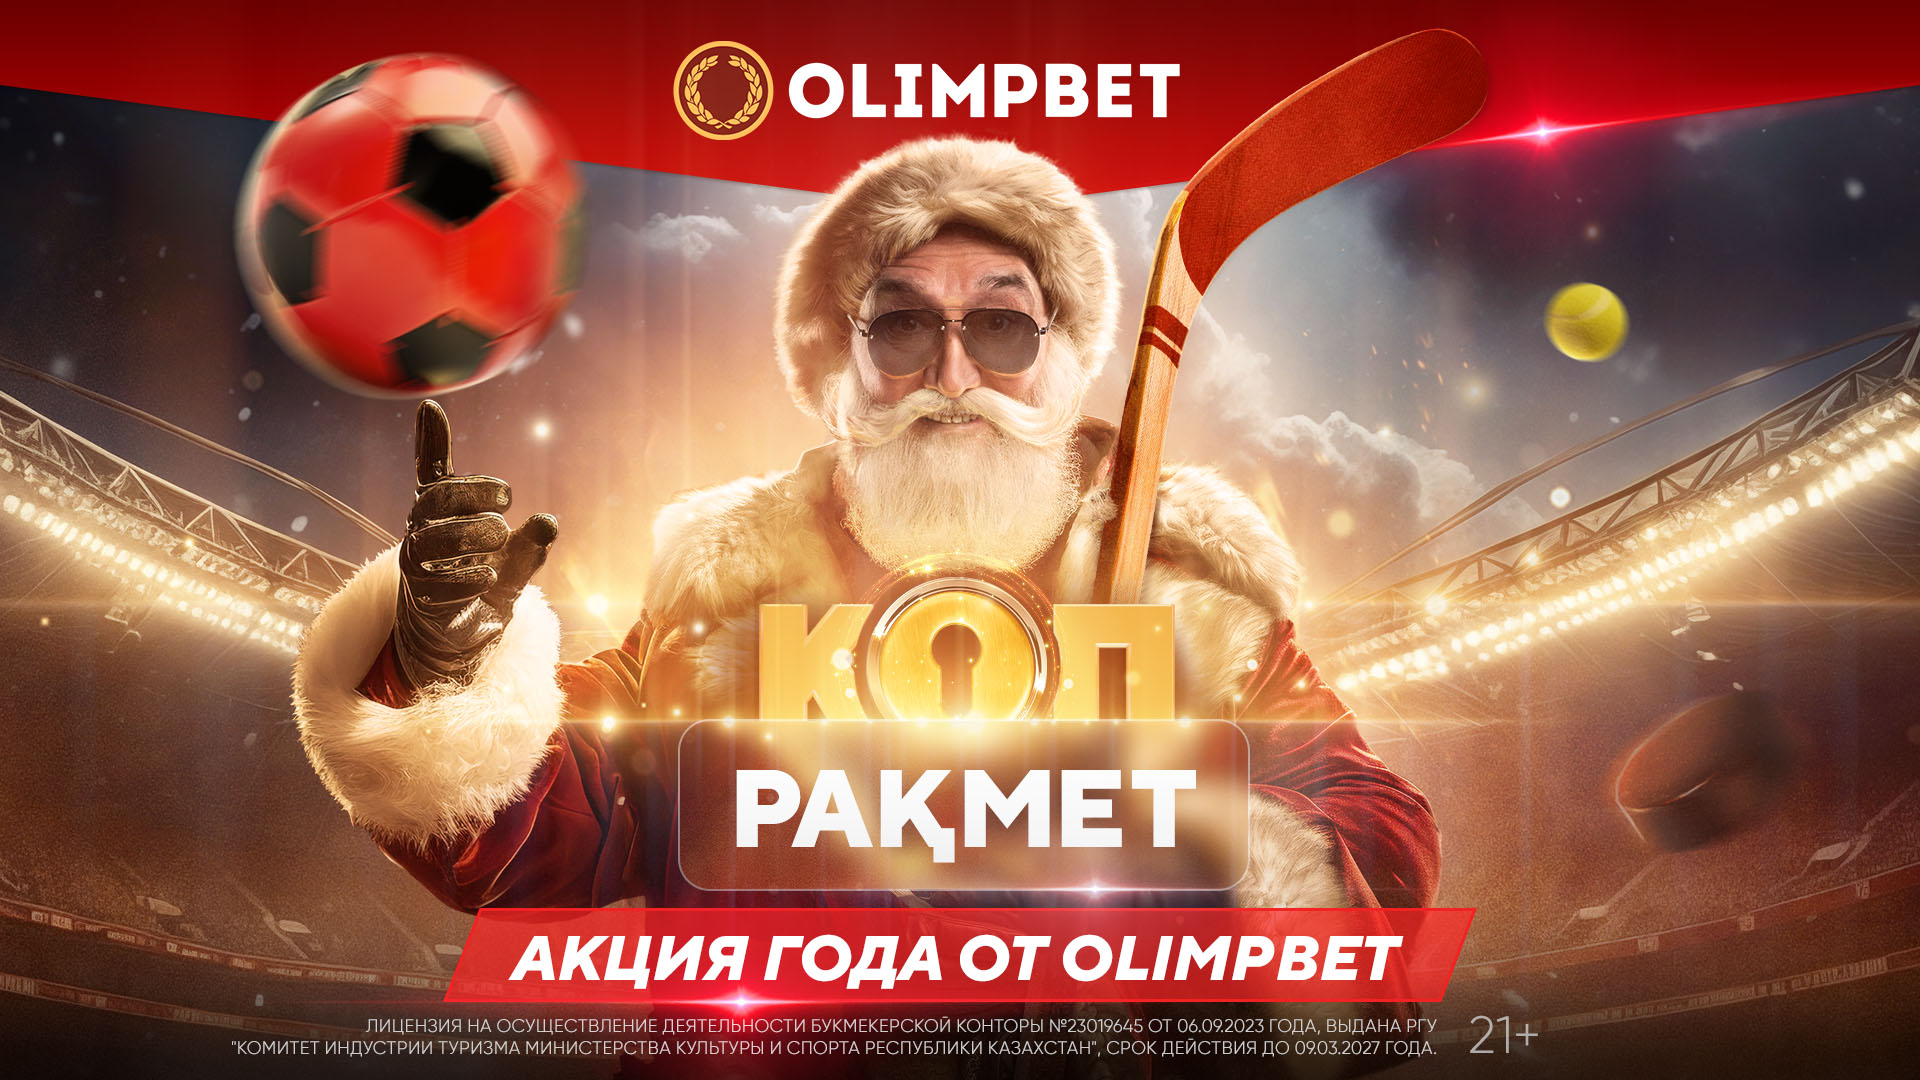 БК Olimpbet объявила о запуске акции «Коп ракмет»